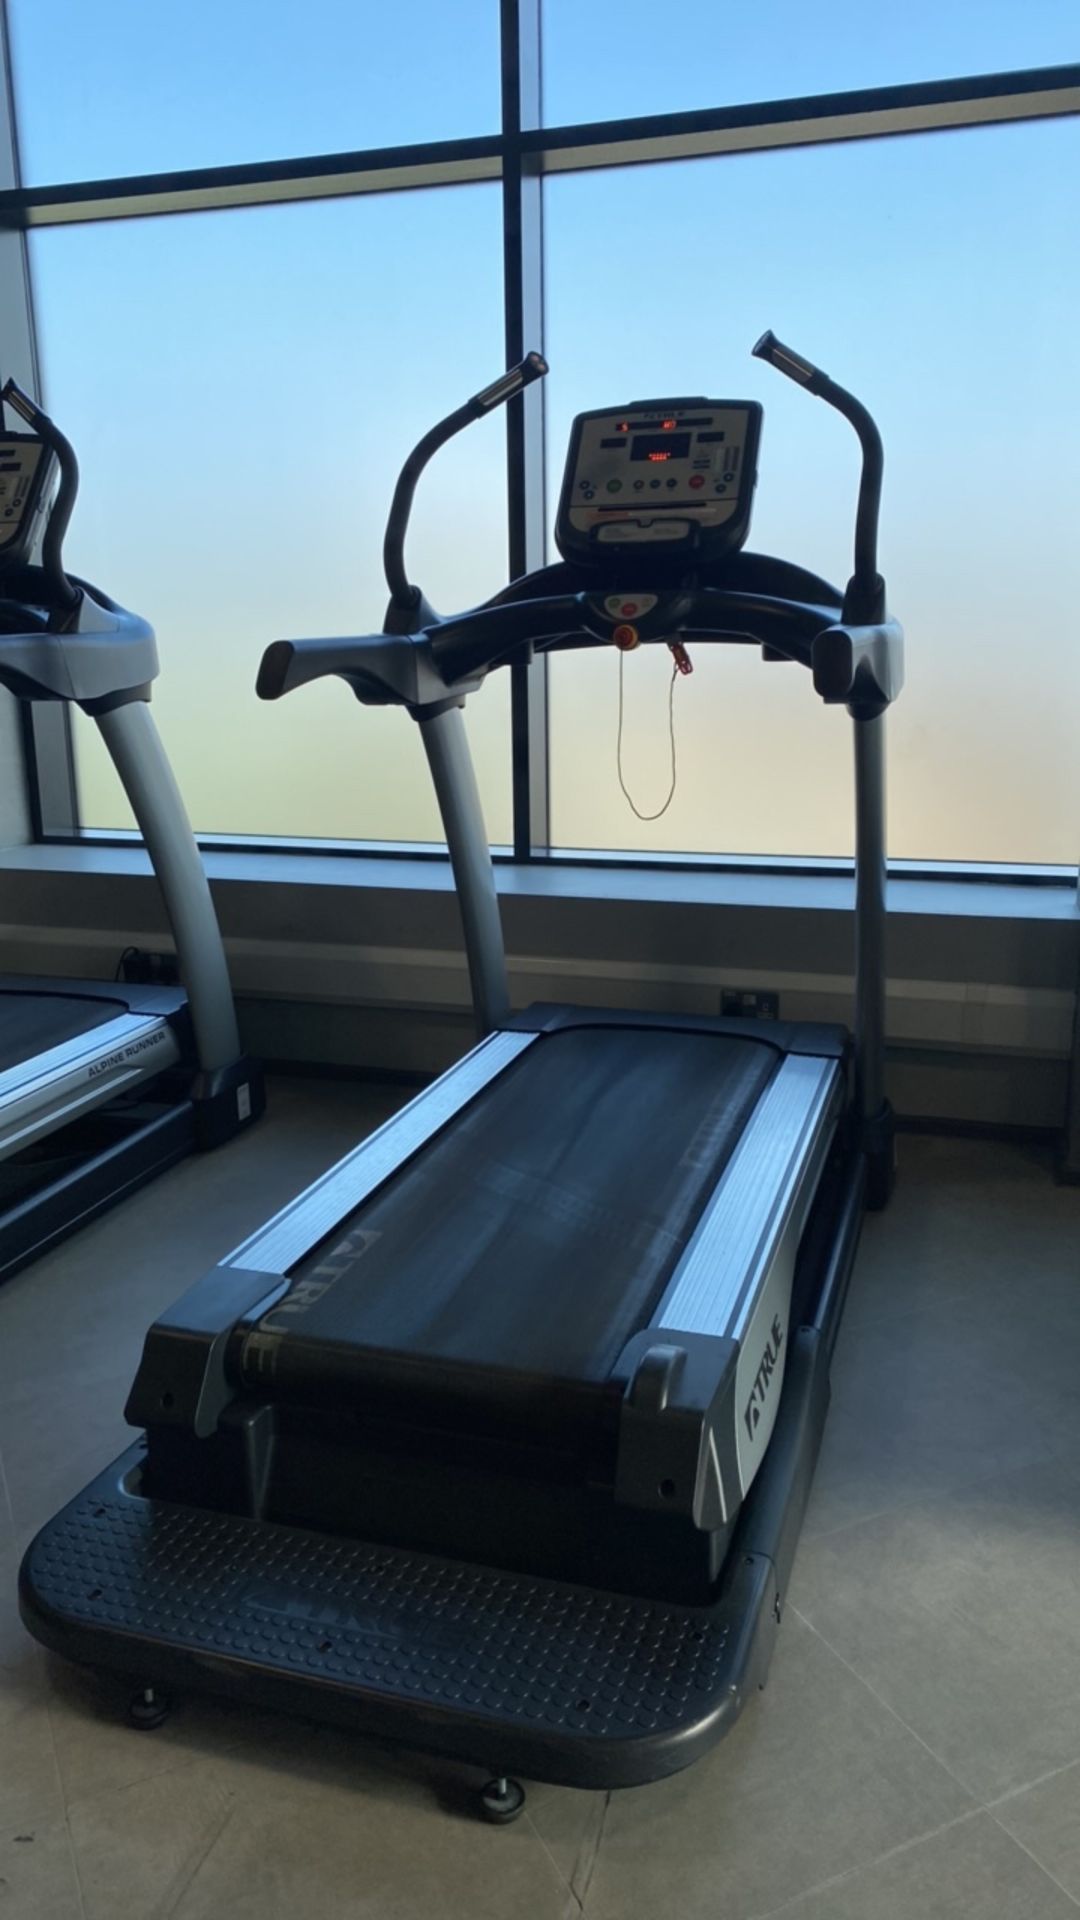 True Alpine Runner Fitness Treadmill with Grips x1